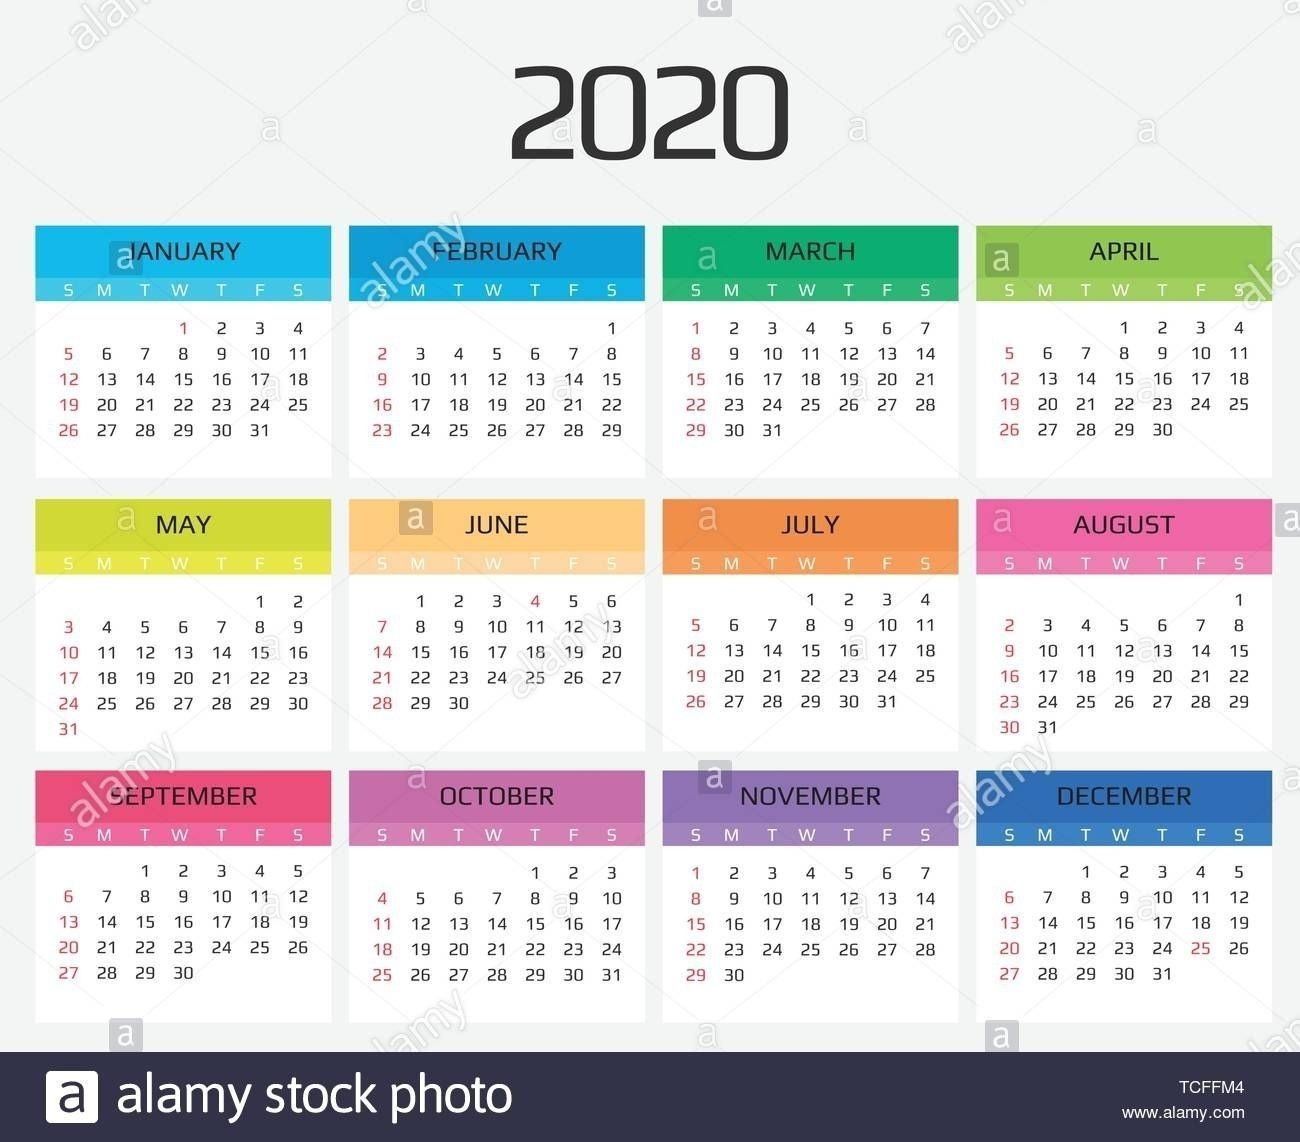 2022 Calendar With Holidays Hong Kong - Towhur